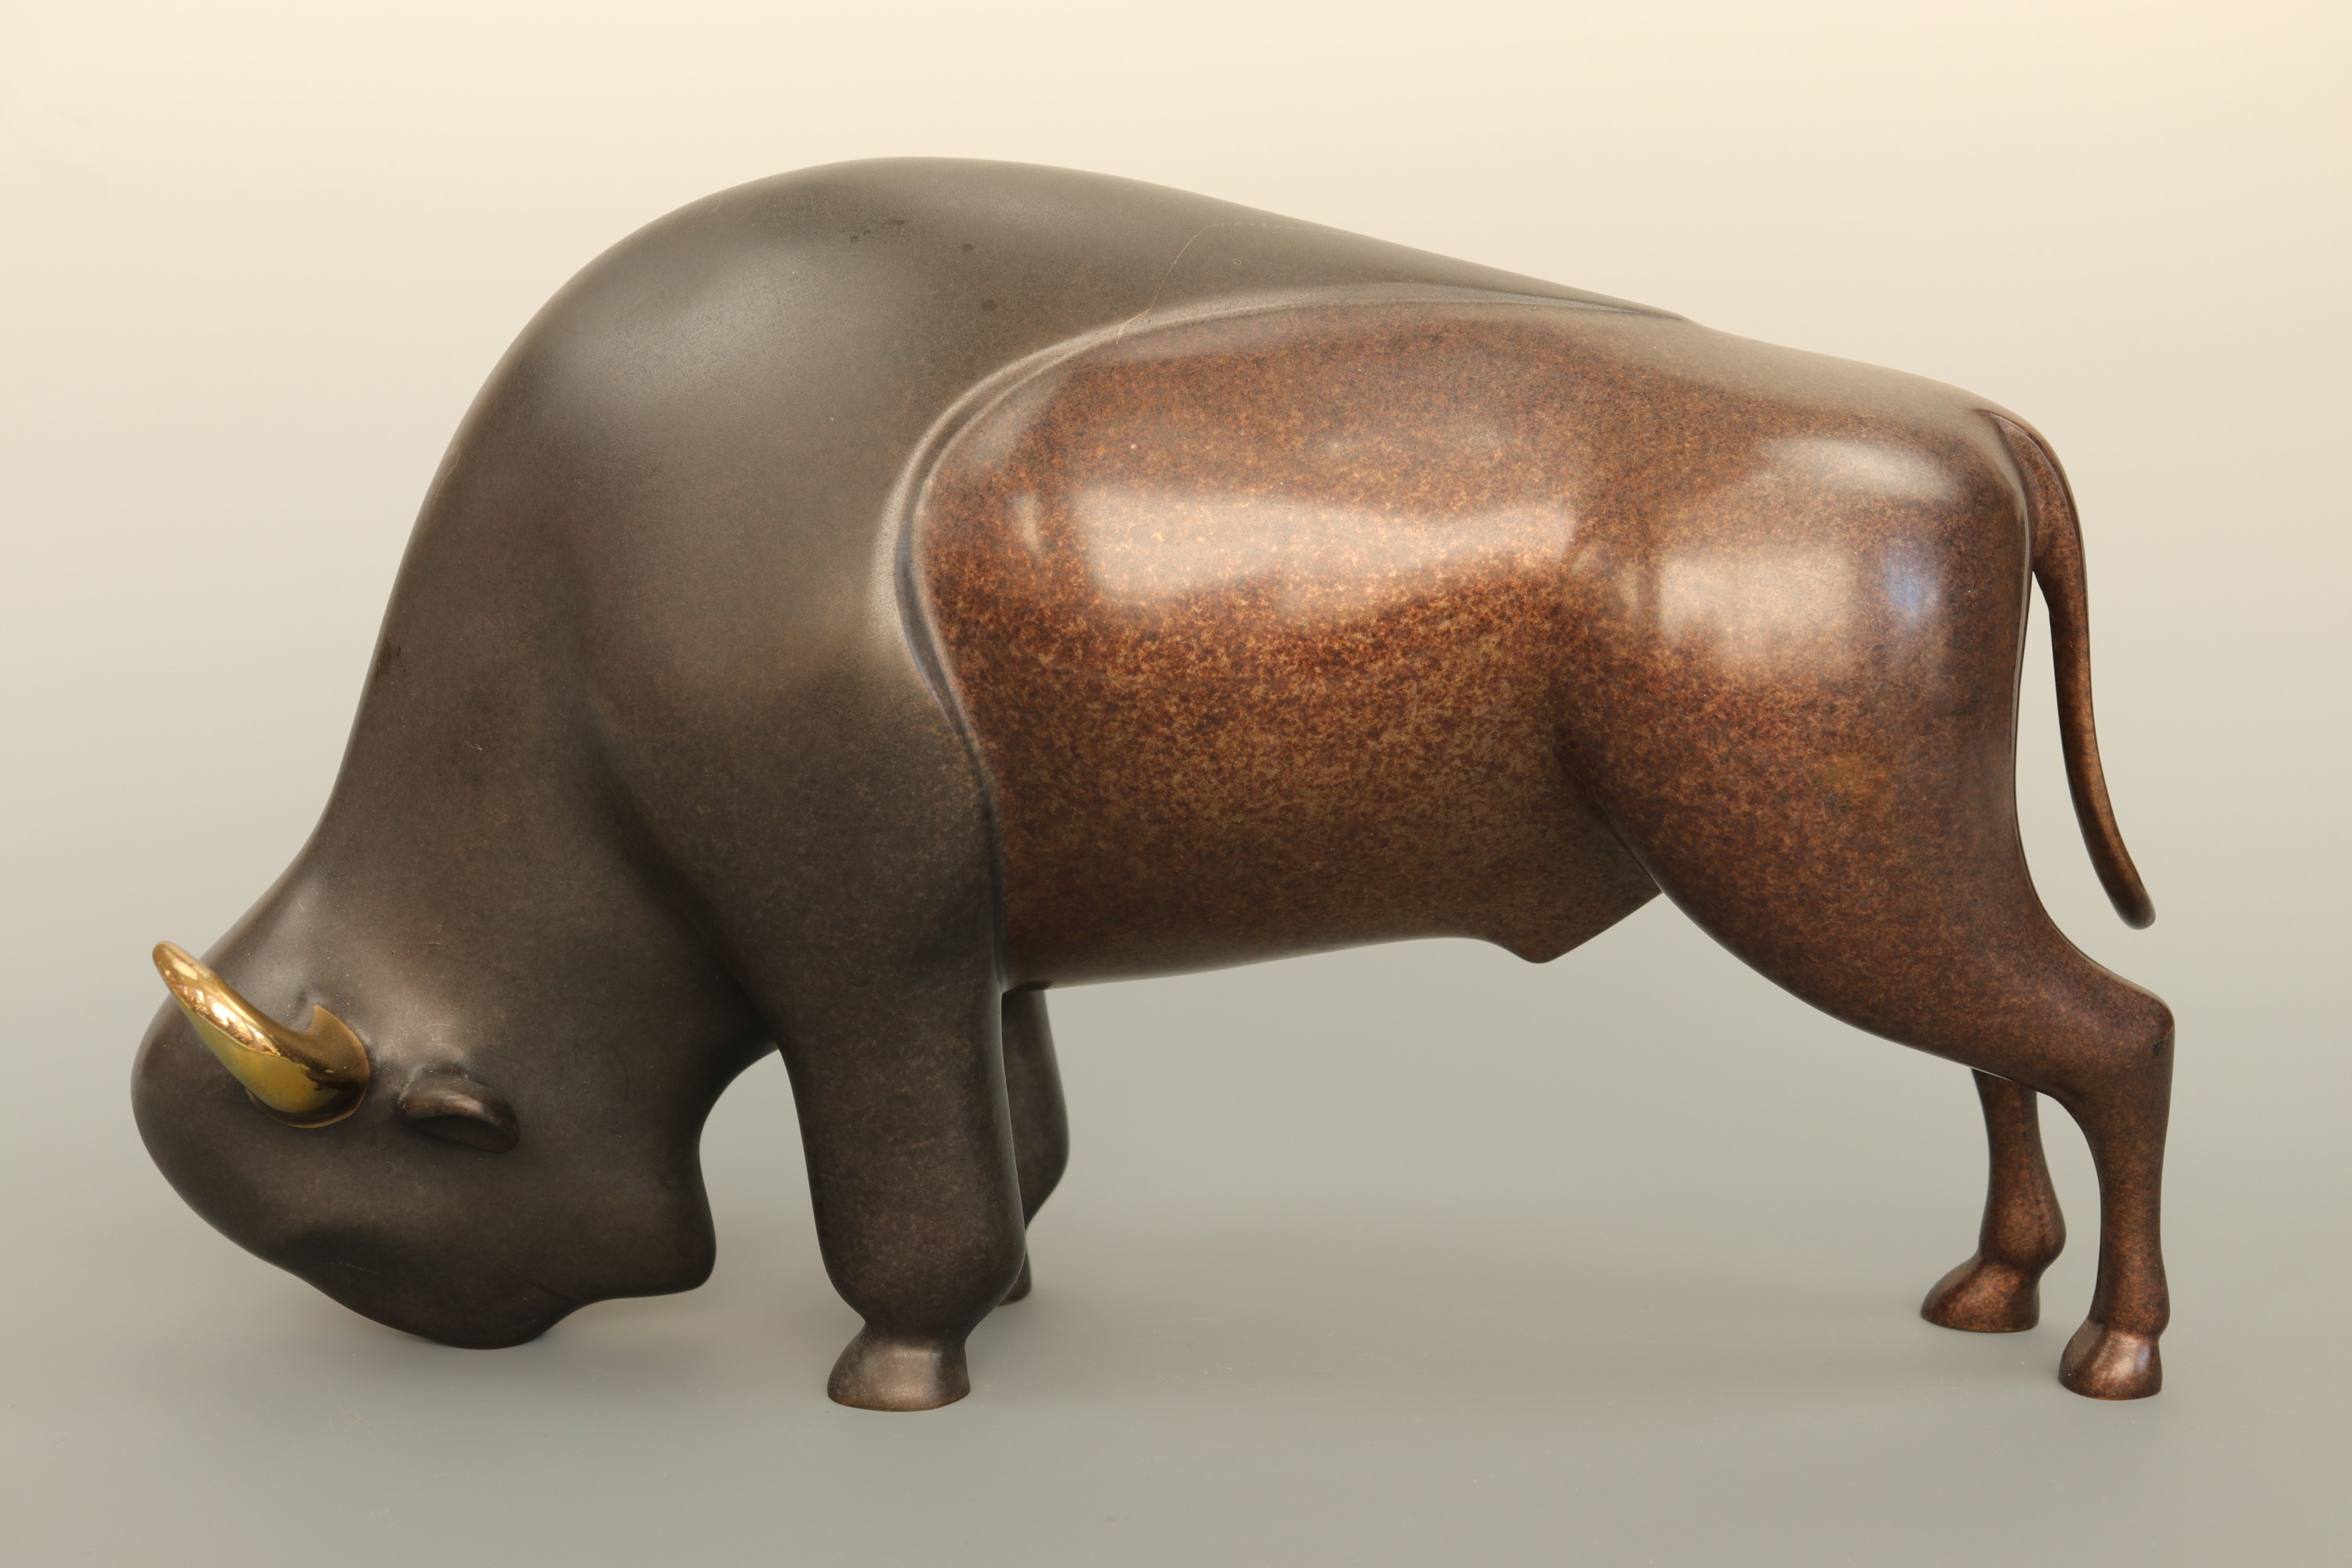 A Loet Vanderveen (Dutch, 1921-2015) "Bison", limited edition bronze, 119/750, 37 x 23 cm high